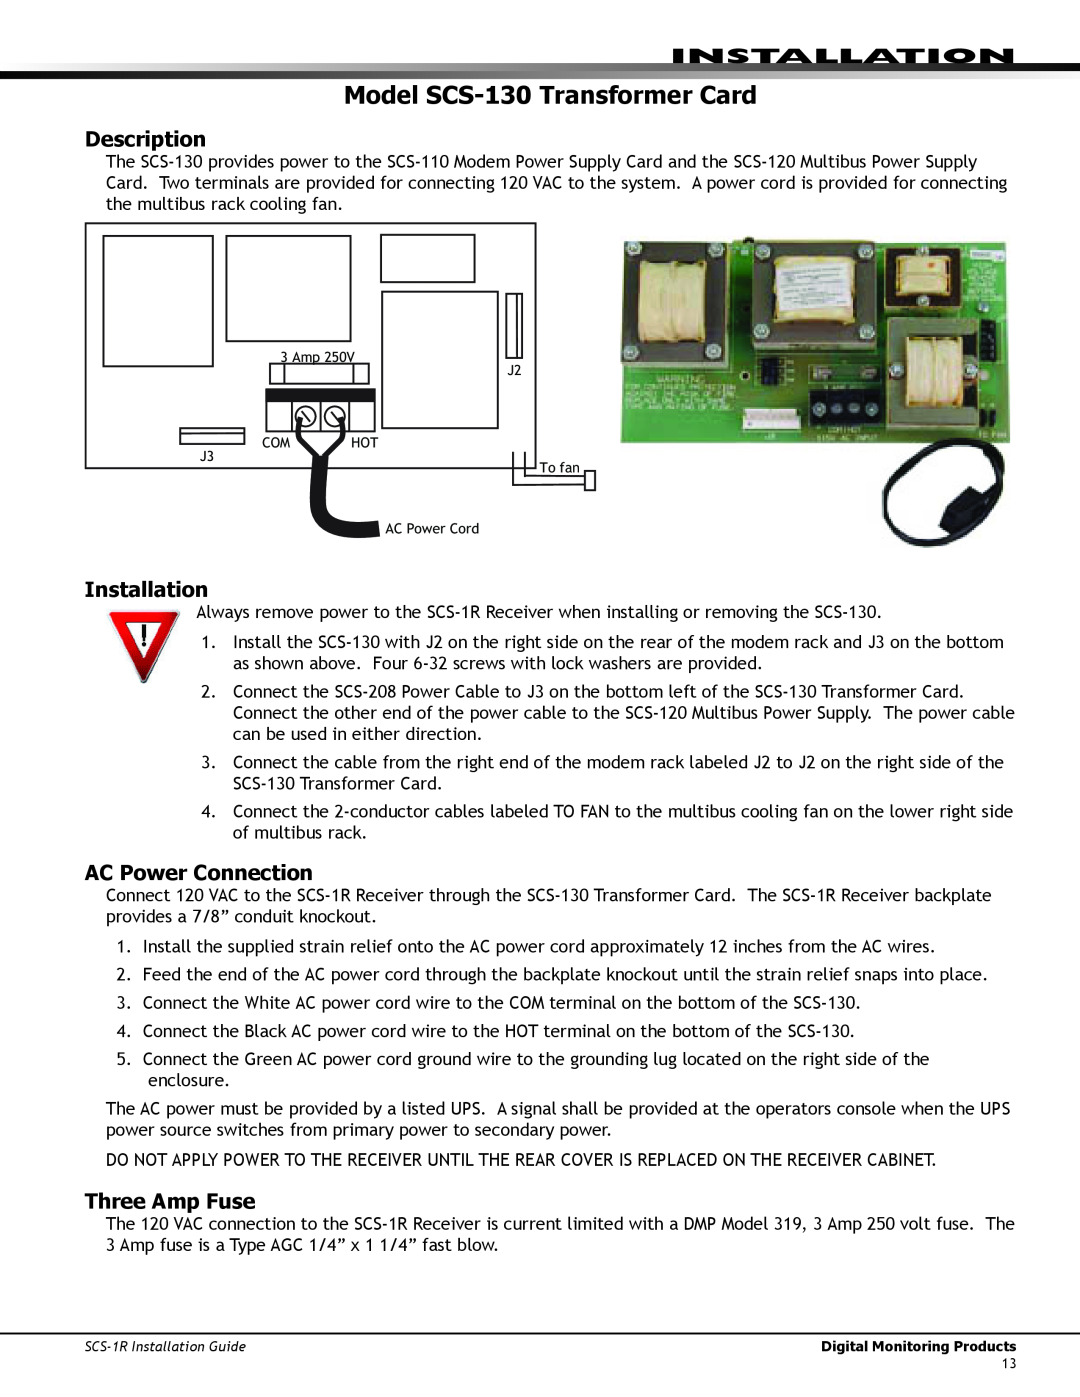 DMP Electronics SCS-1R manual Model SCS-130Transformer Card, Installation, AC Power Connection, Three Amp Fuse, Description 